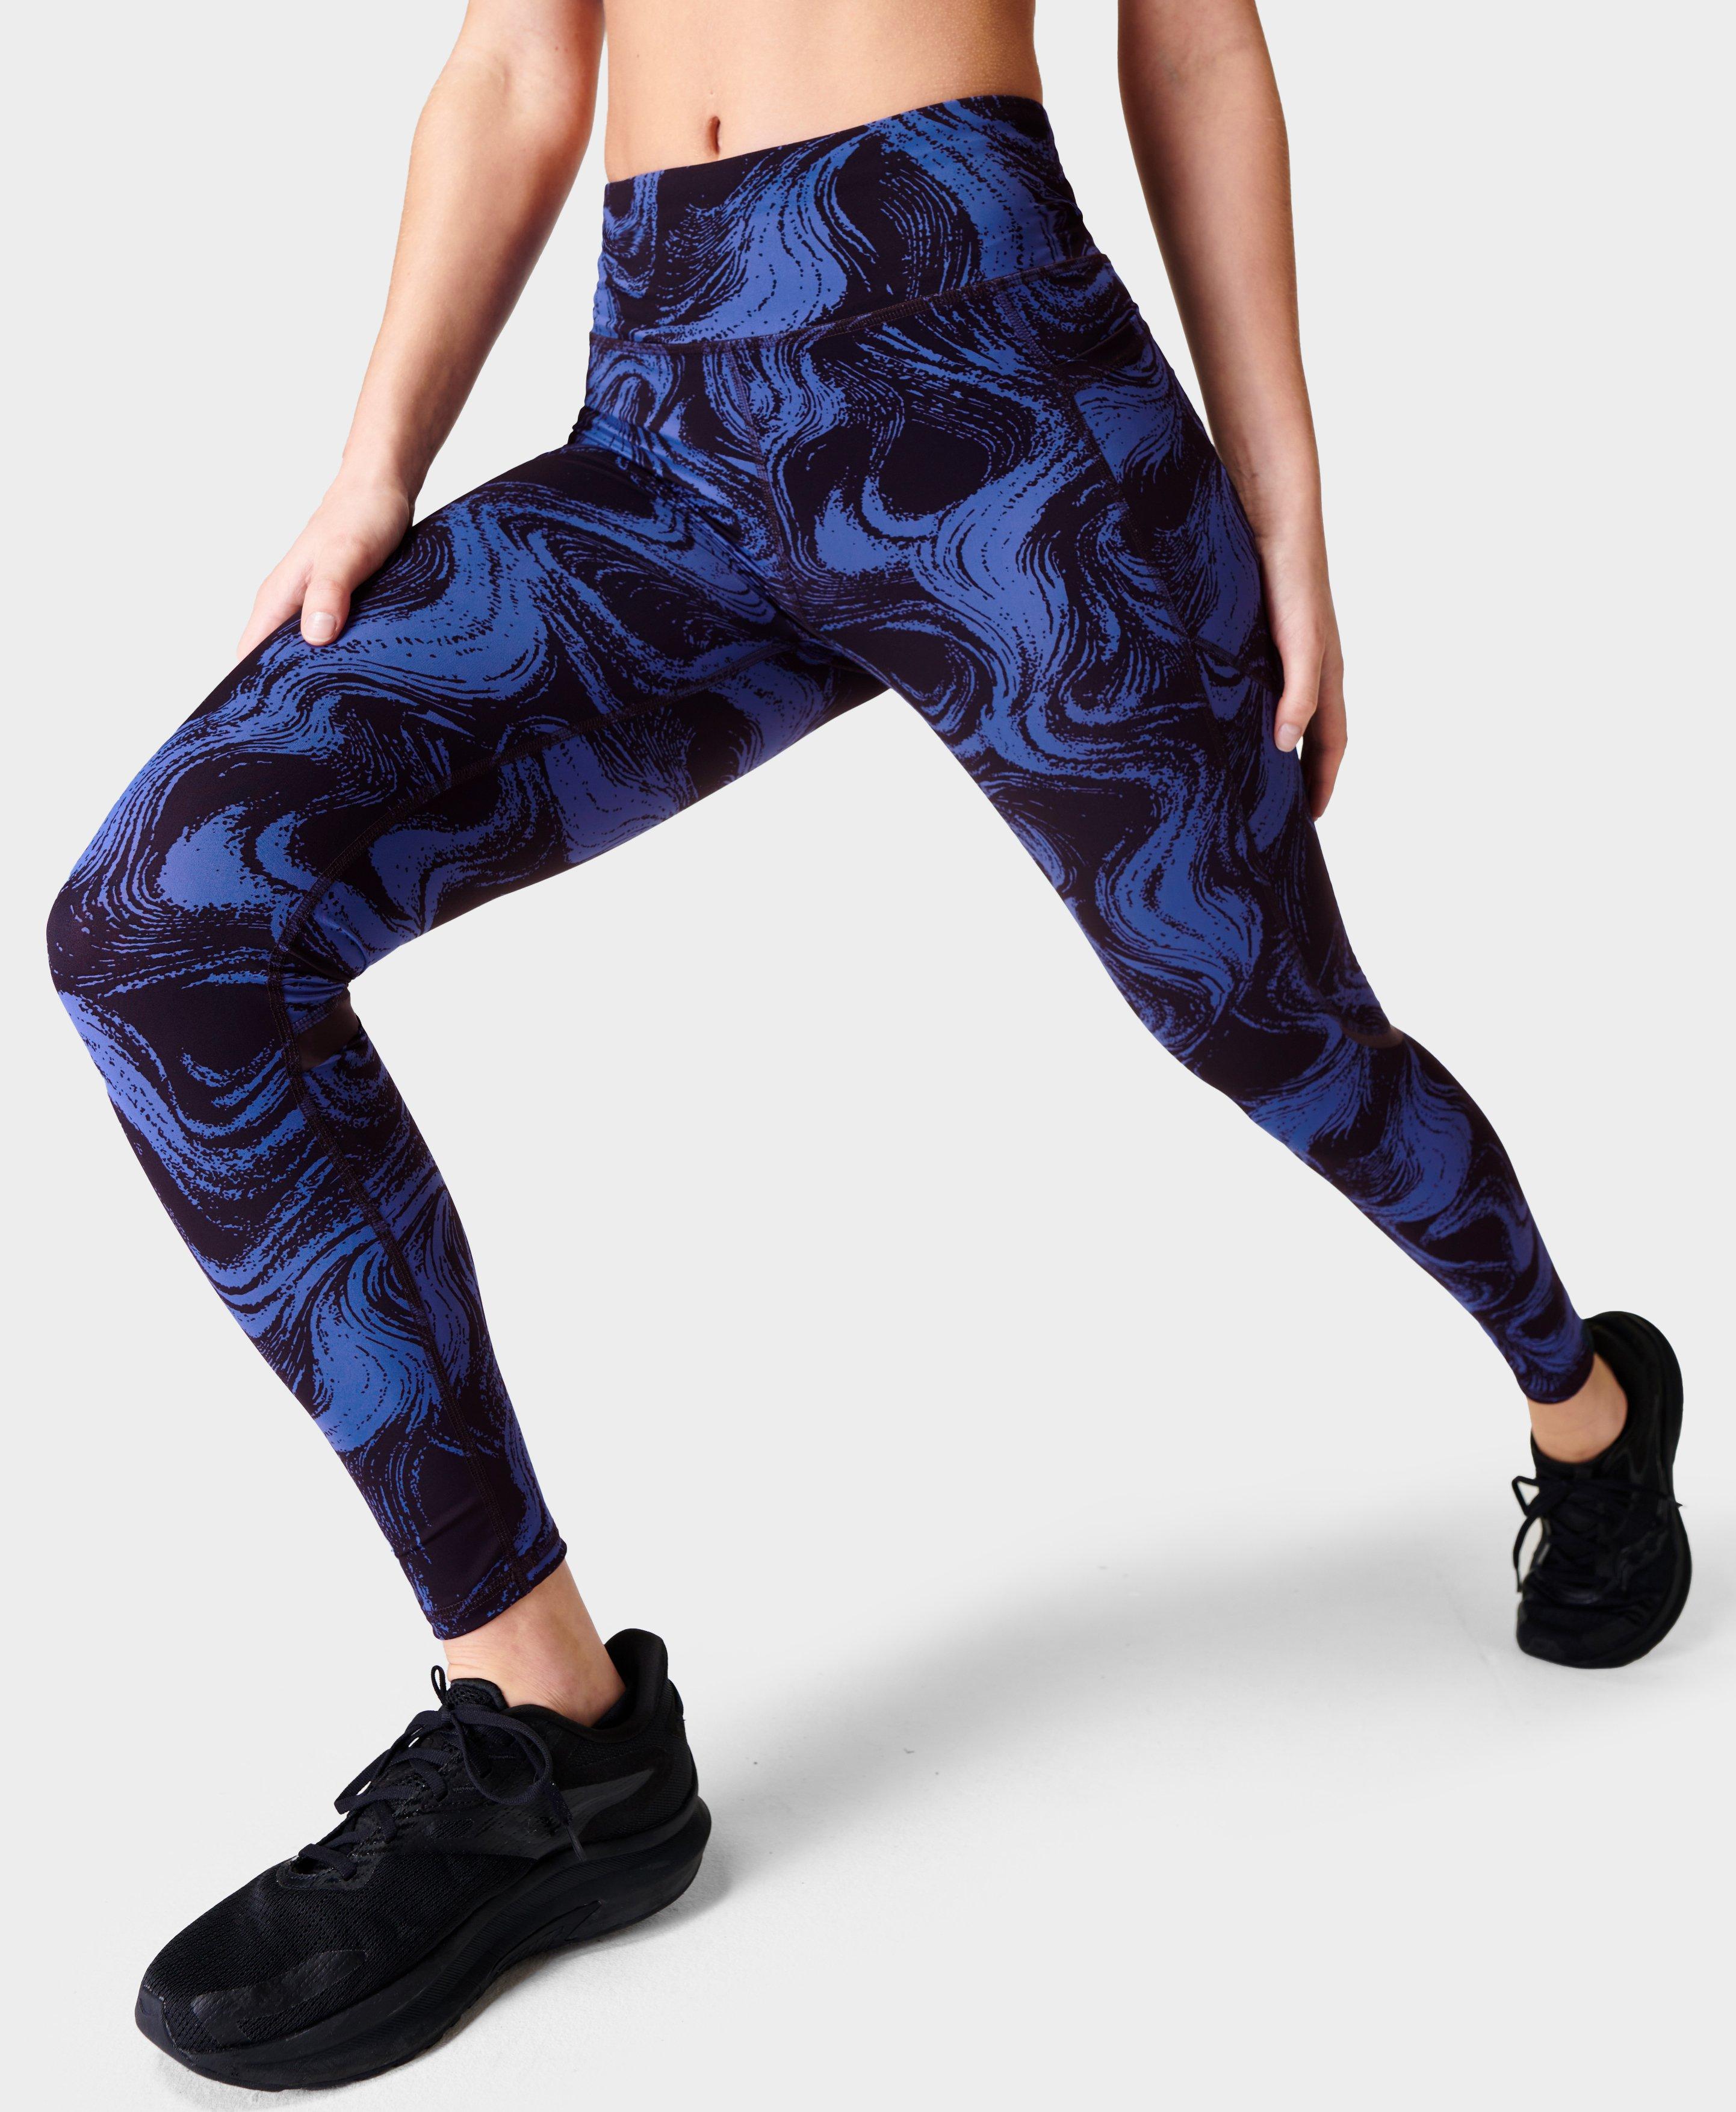 Pockets For Women - Sweaty Betty Zero Gravity High-Waisted Running Leggings,  Blue, Women's